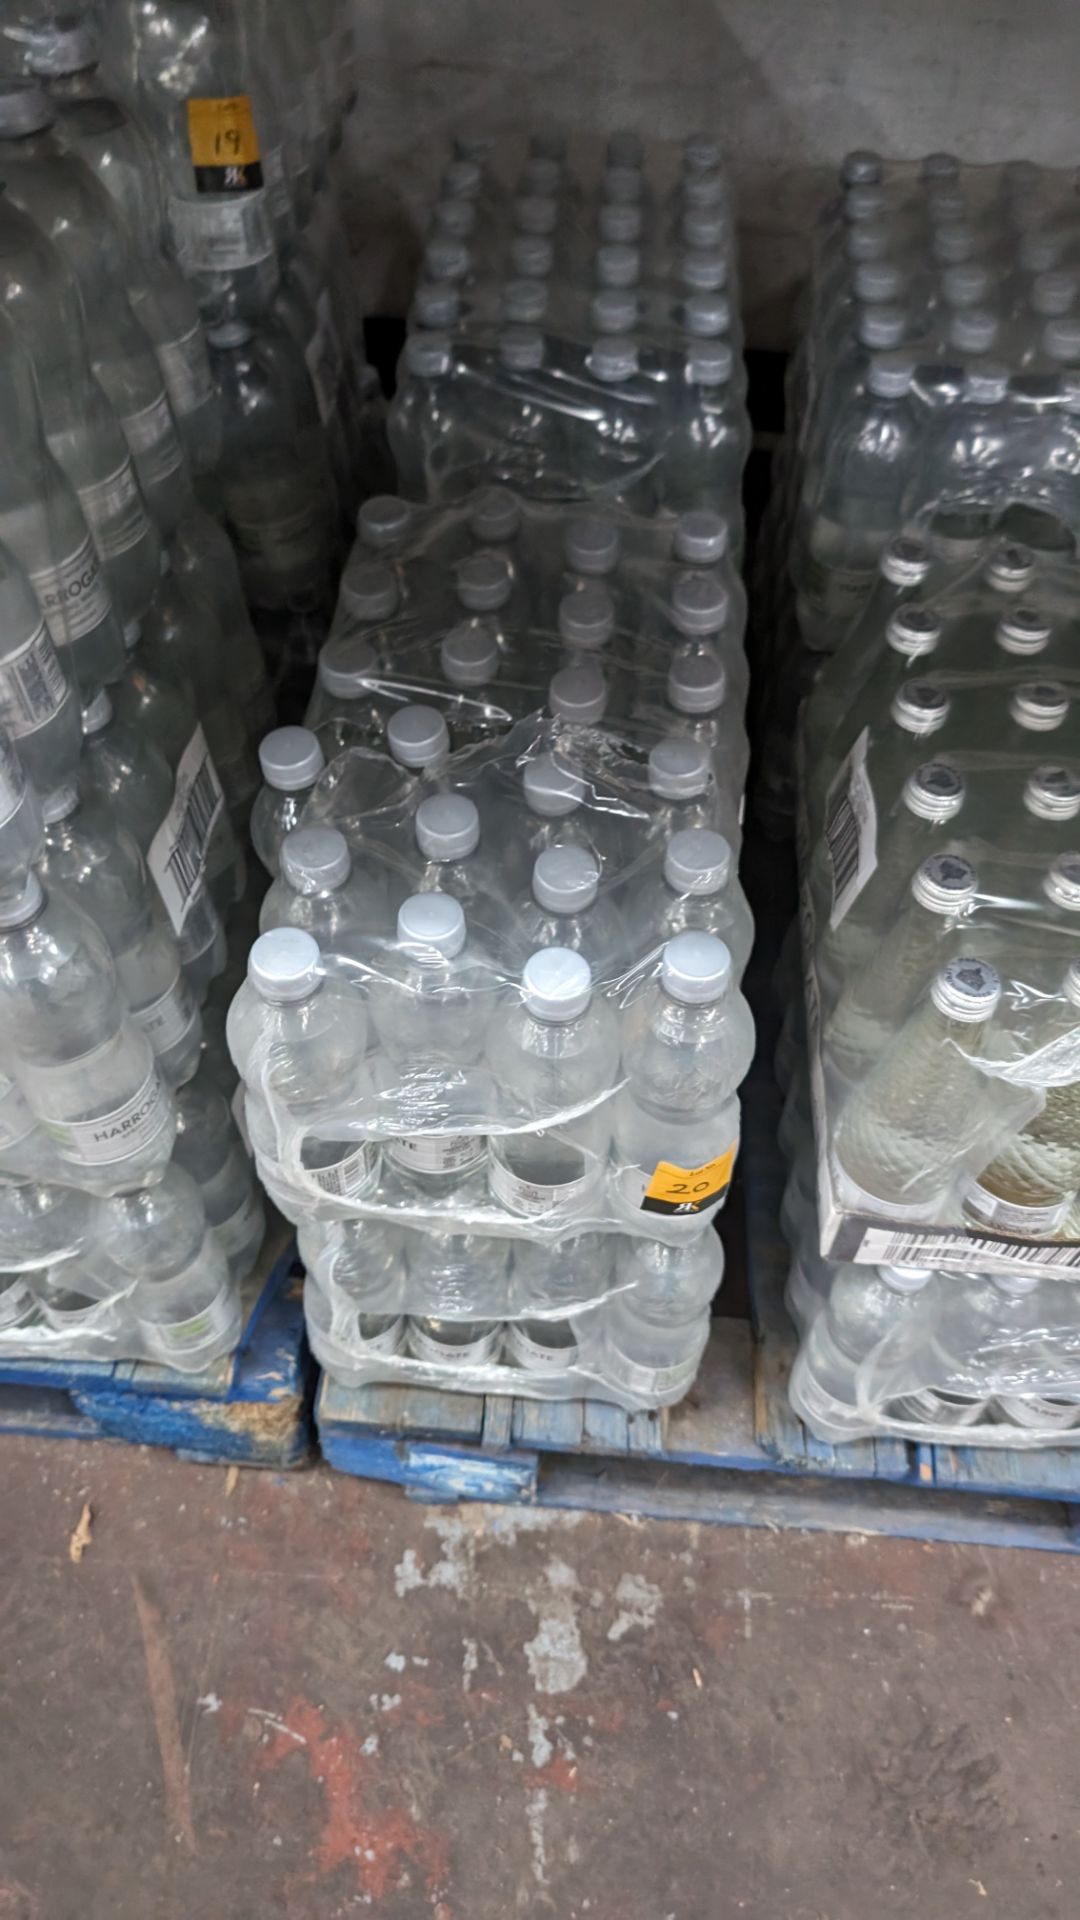 96 off 500ml bottles of Harrogate sparkling spring water, best before date July 2024 (4 cartons) - Image 5 of 5